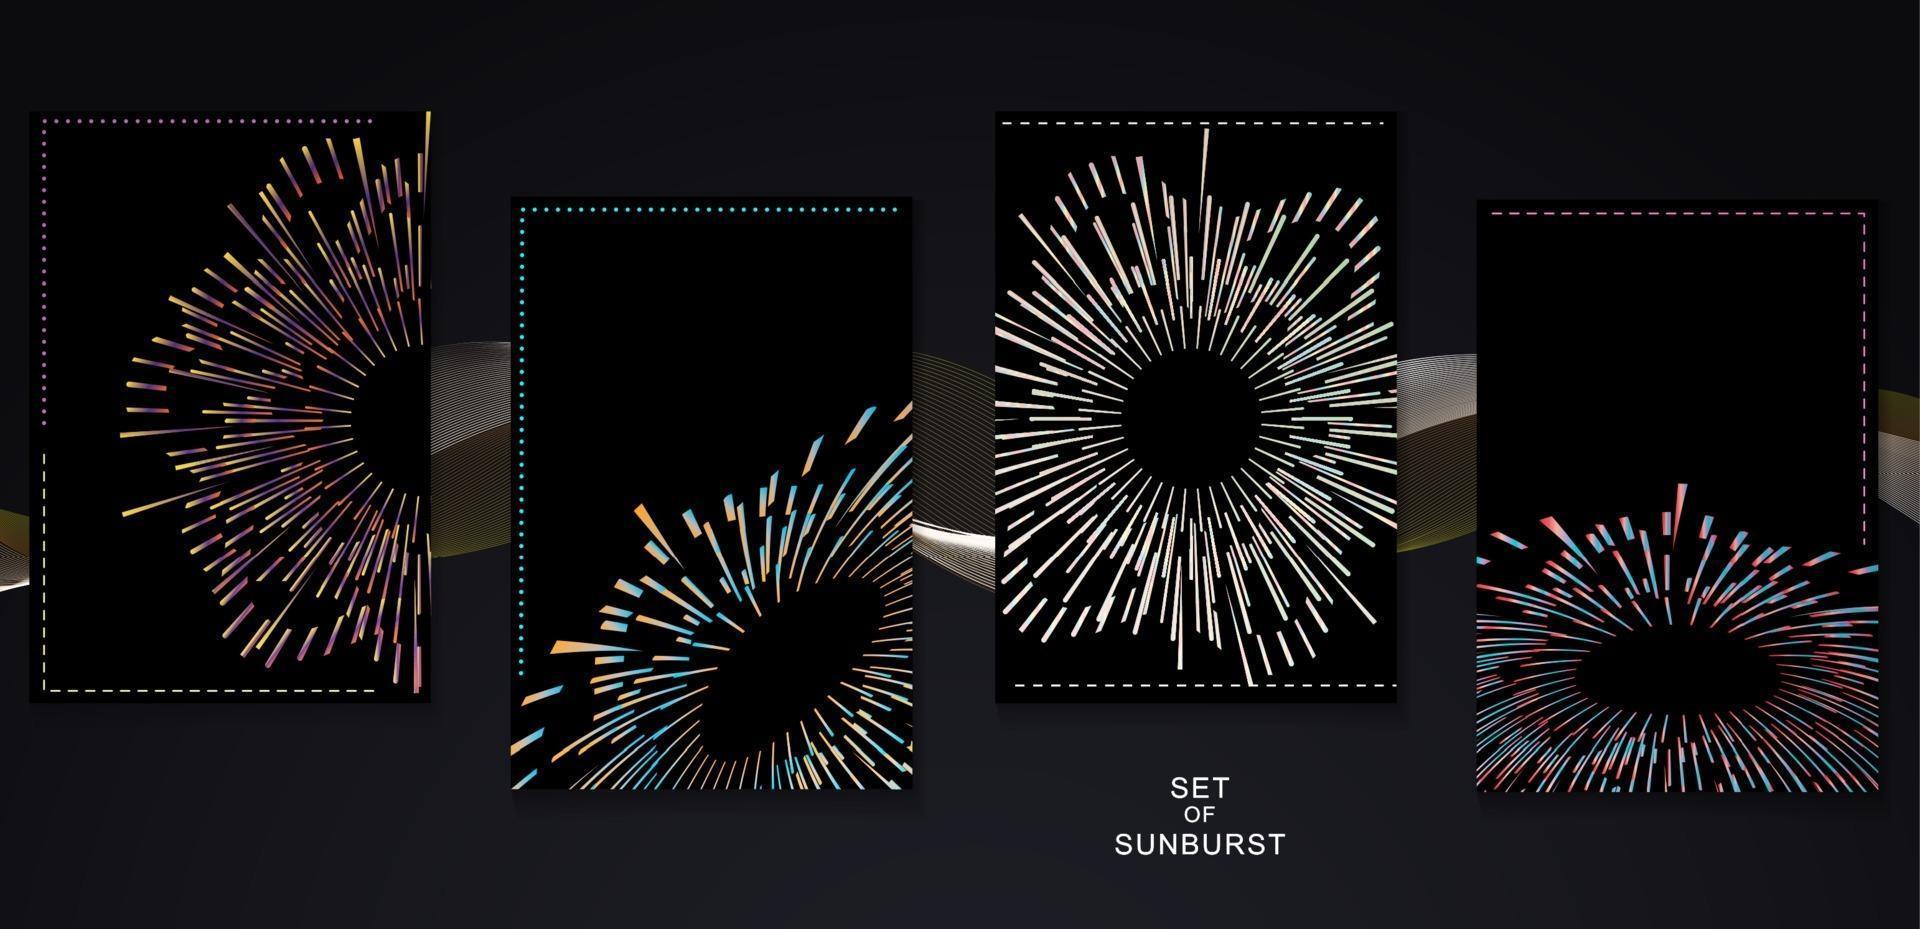 illustration graphic vector of set of sunburst design